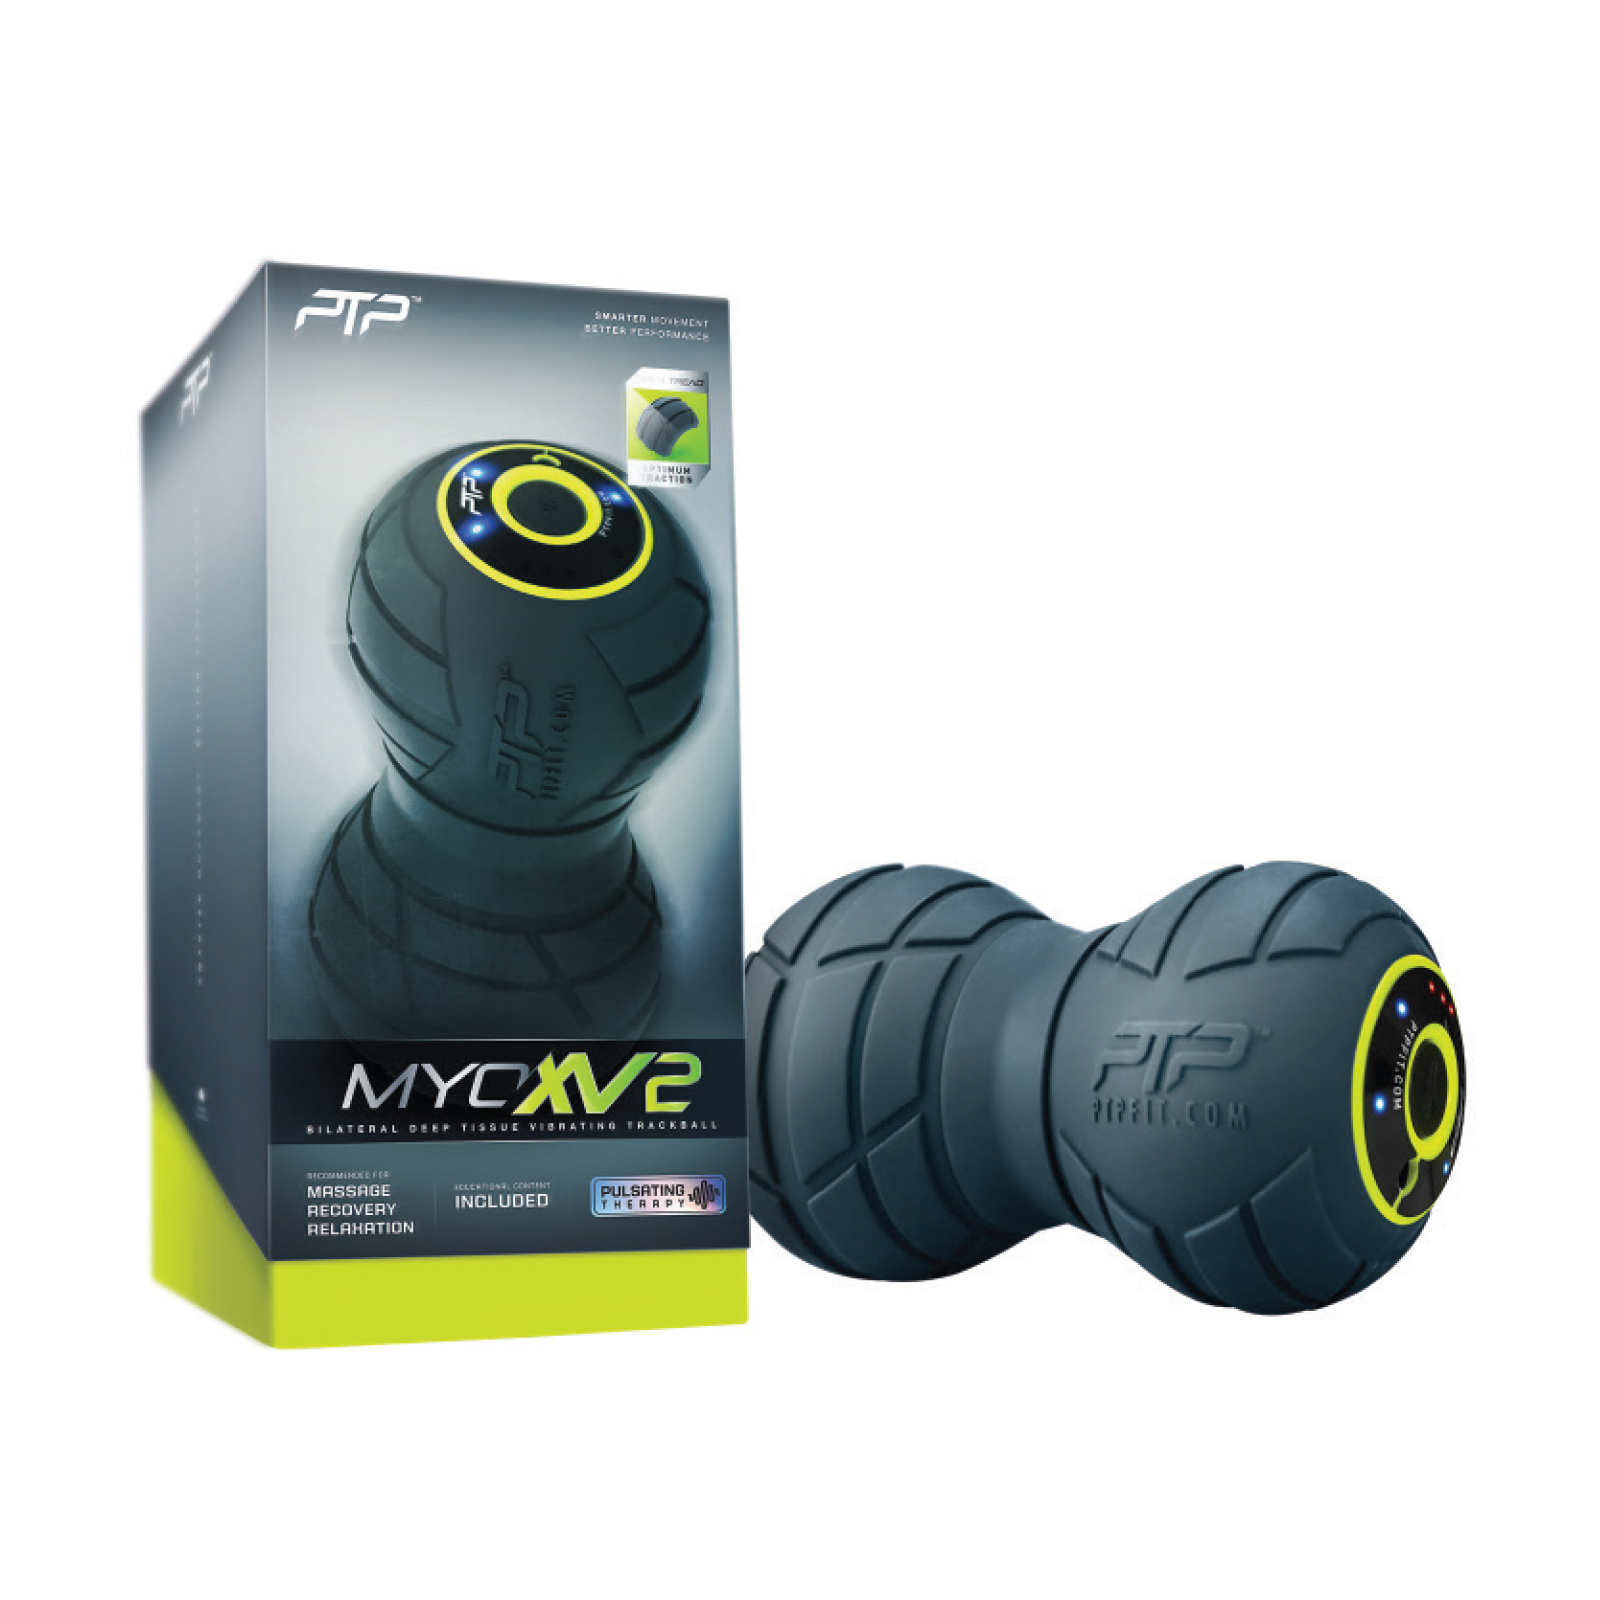 MYOXV2 Vibrating Roller